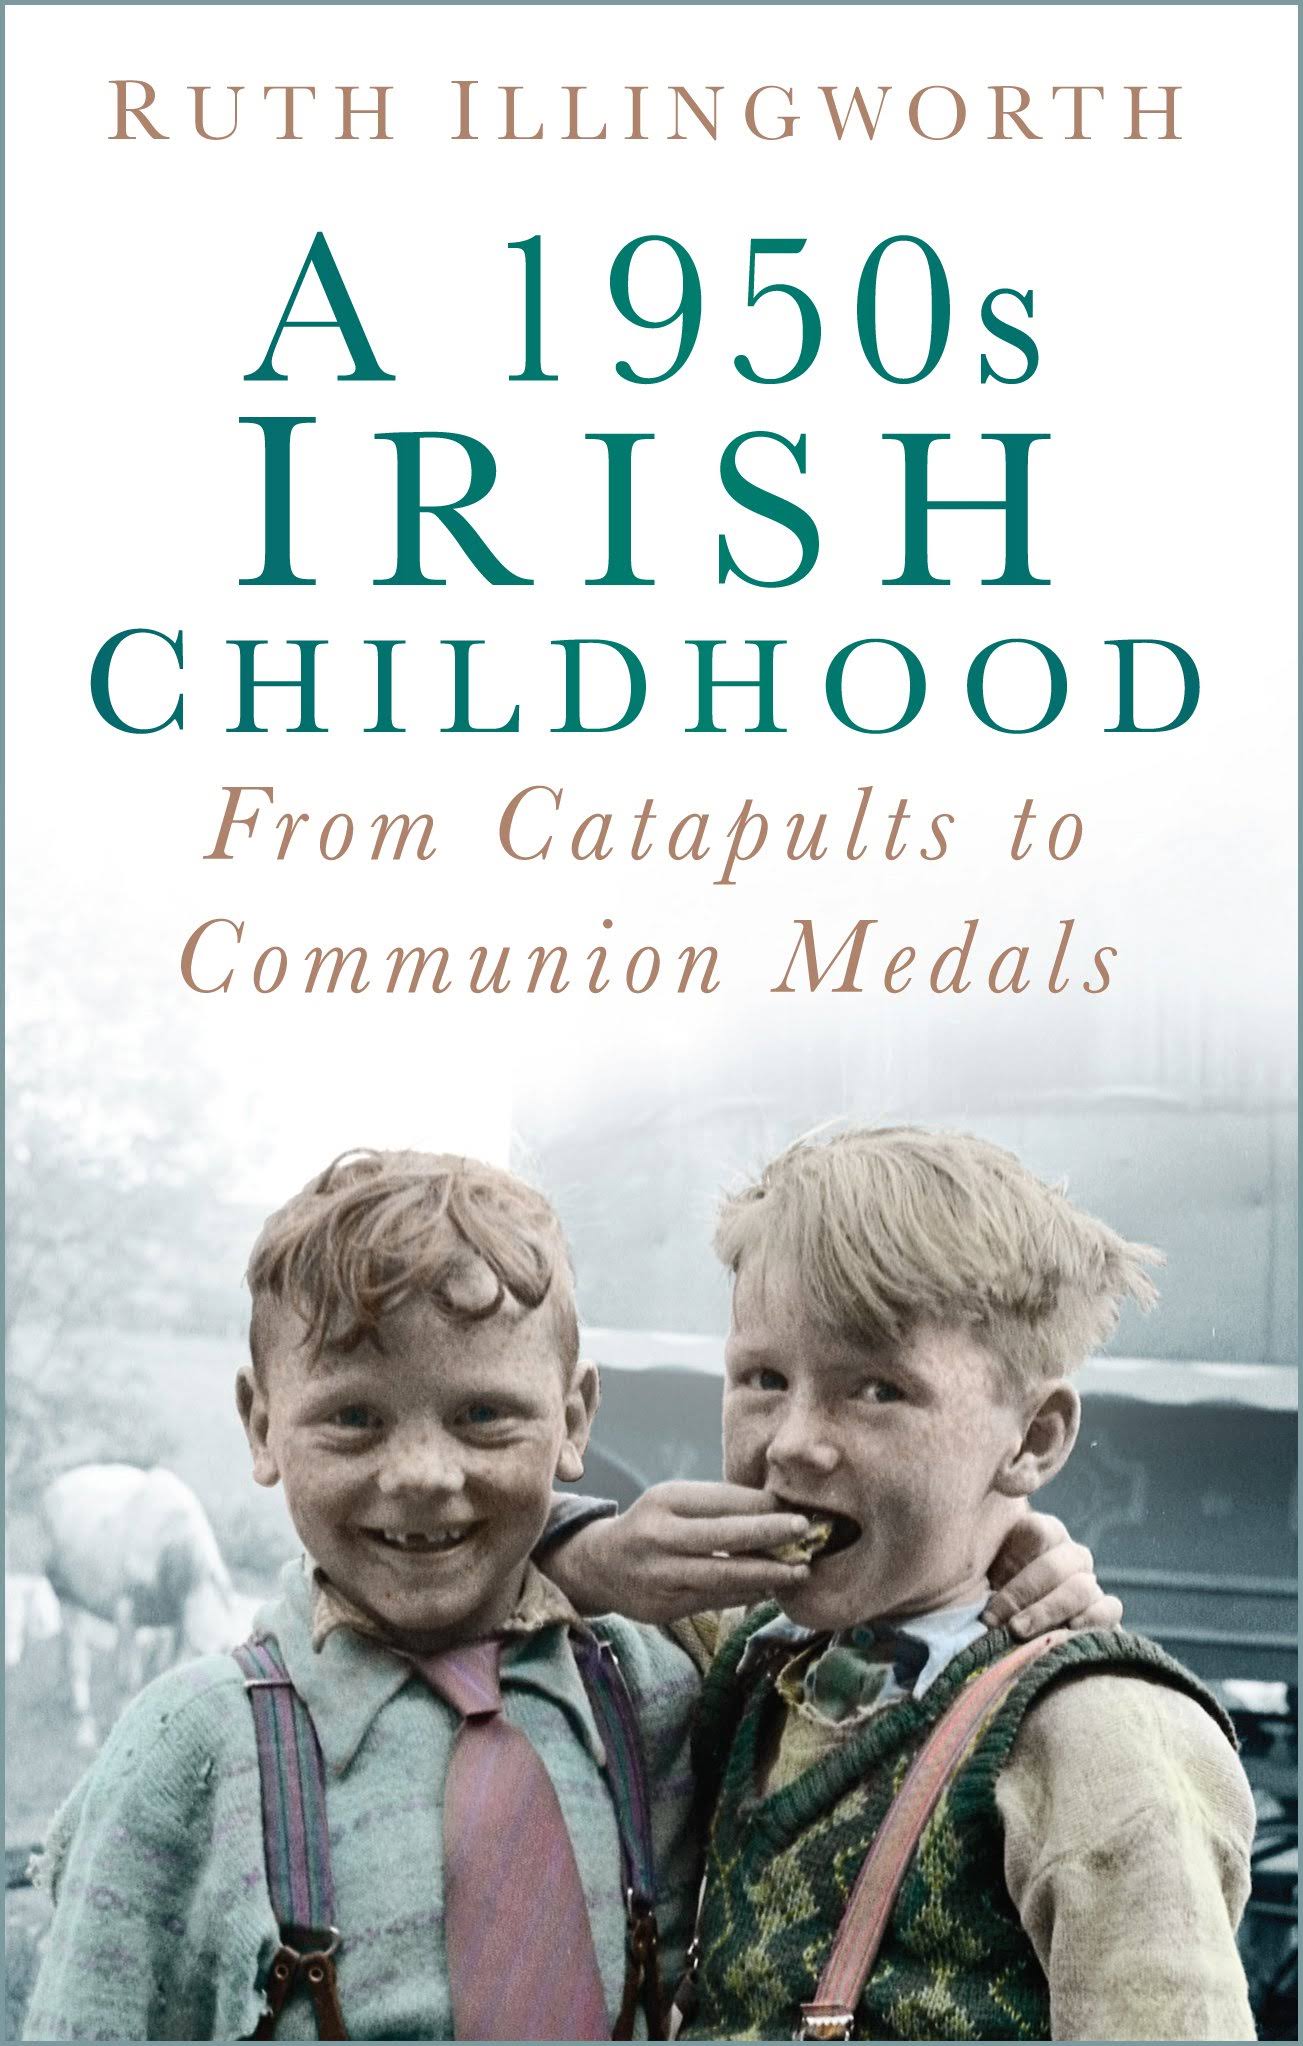 A 1950s Irish Childhood by Ruth Illingworth